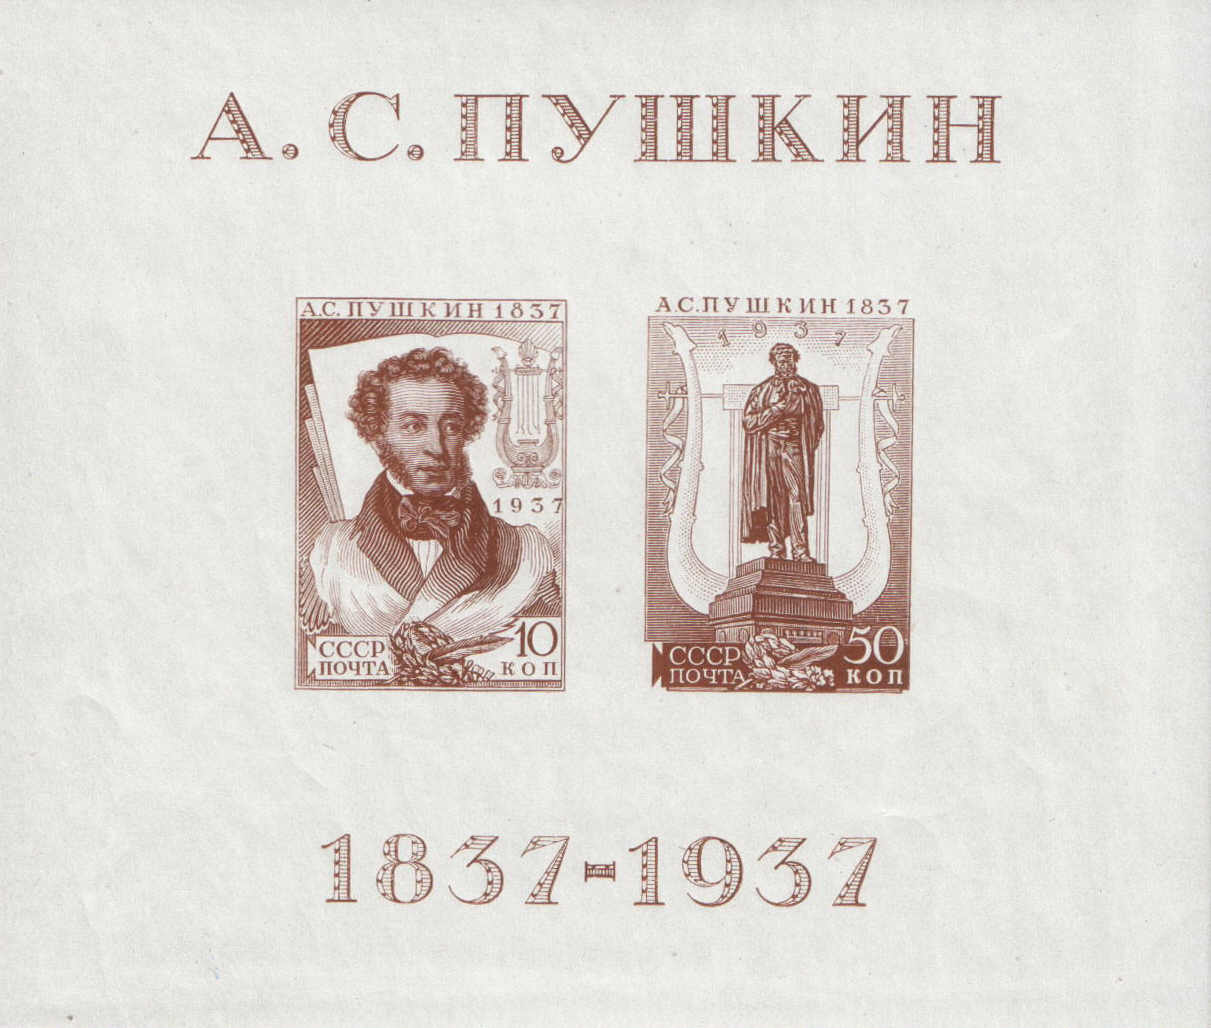 Aleksander Pushkin and his monument